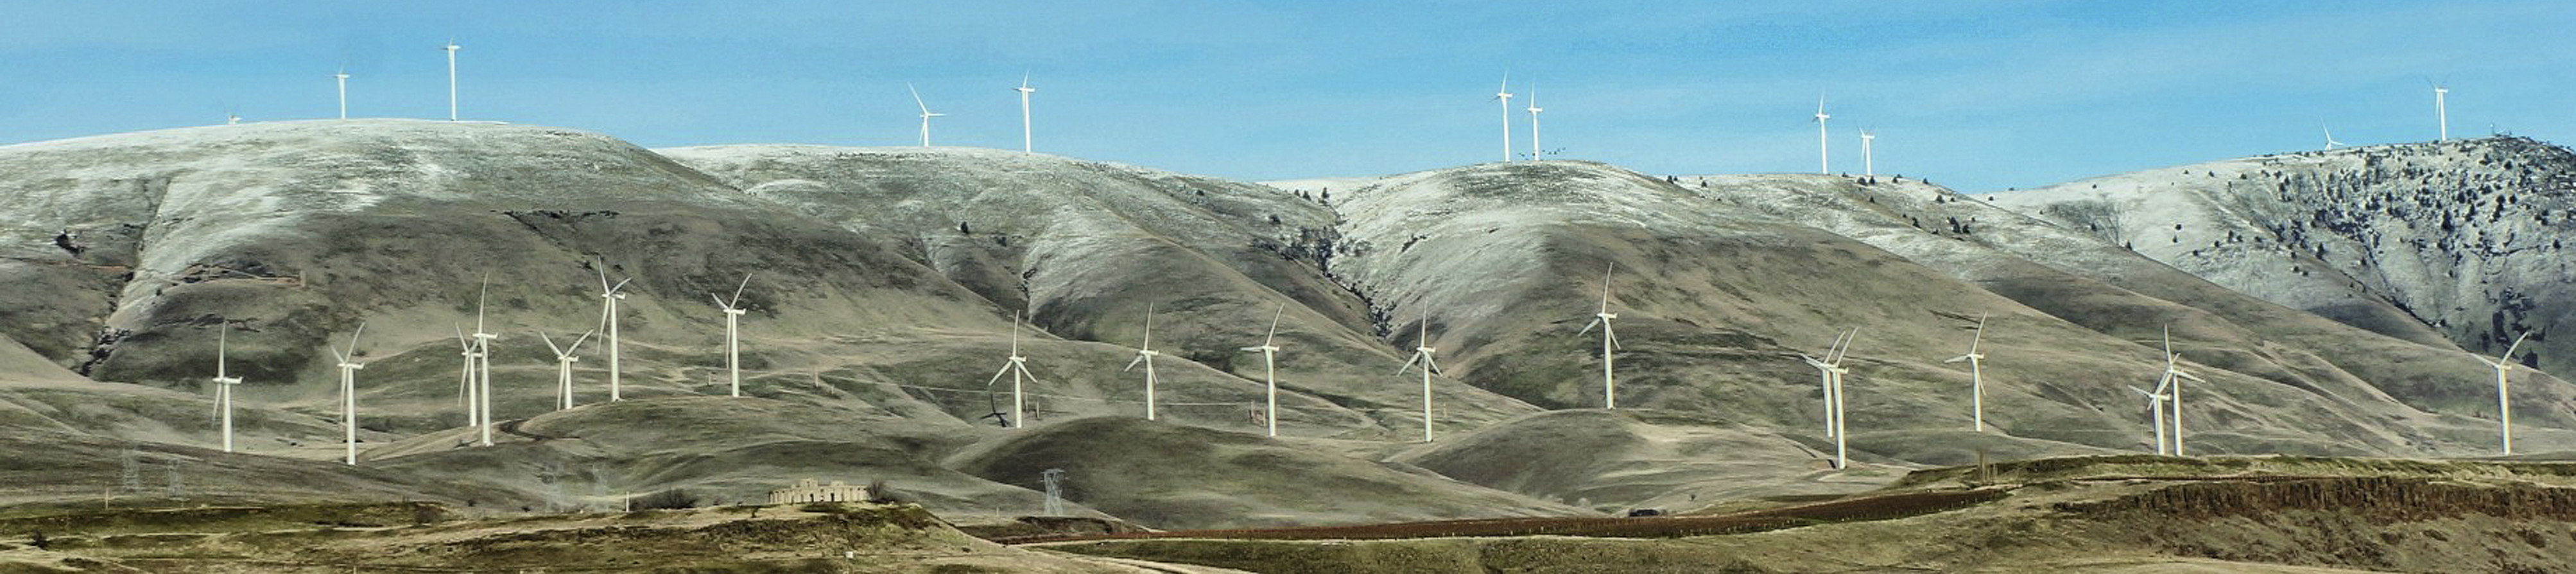 Landscape of a huge wind farm